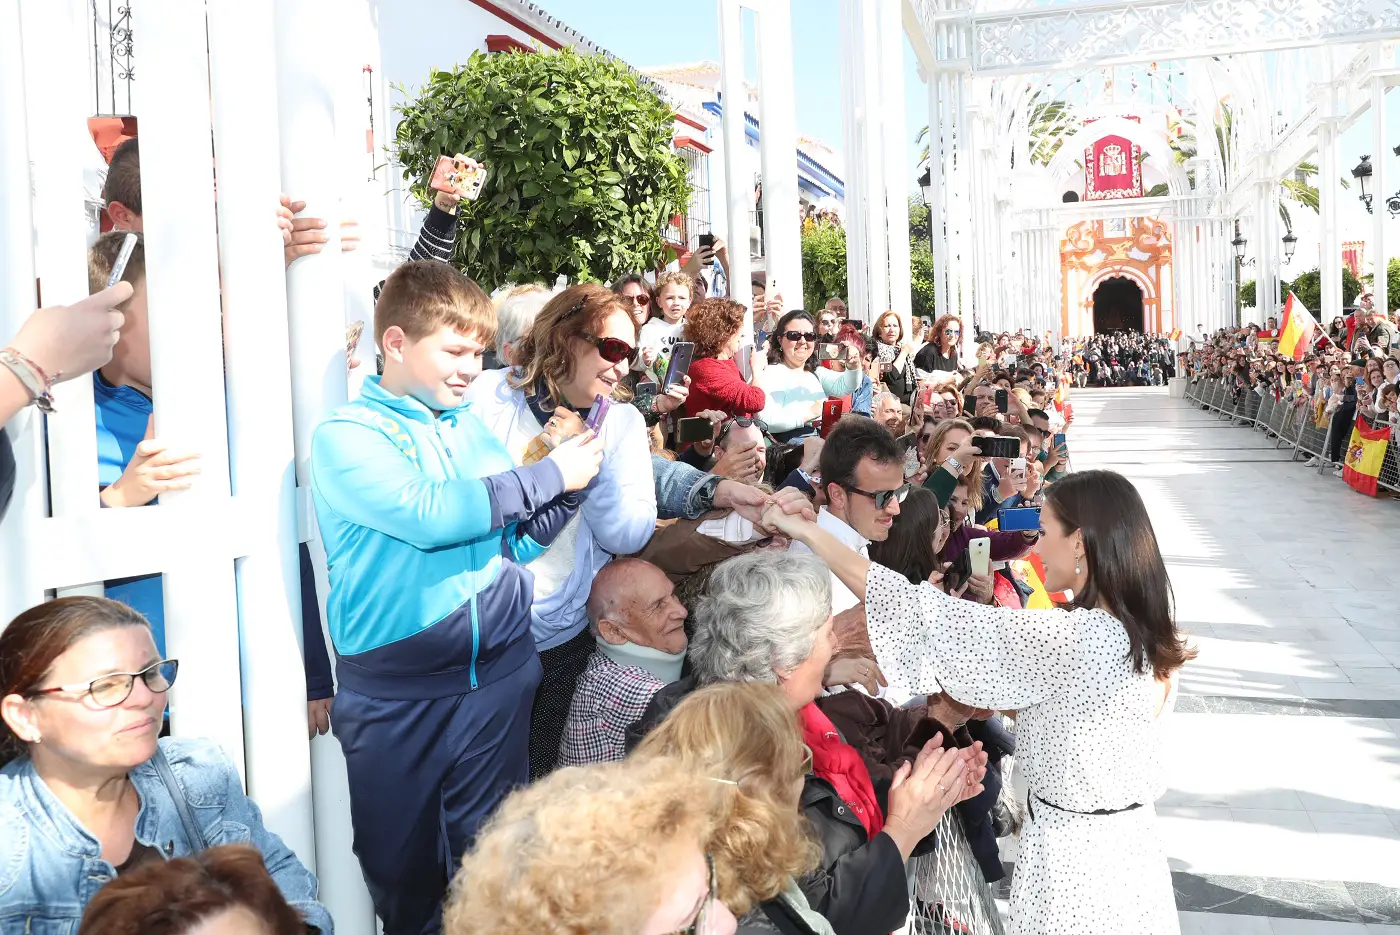 Queen Letizia met with the public during the visit